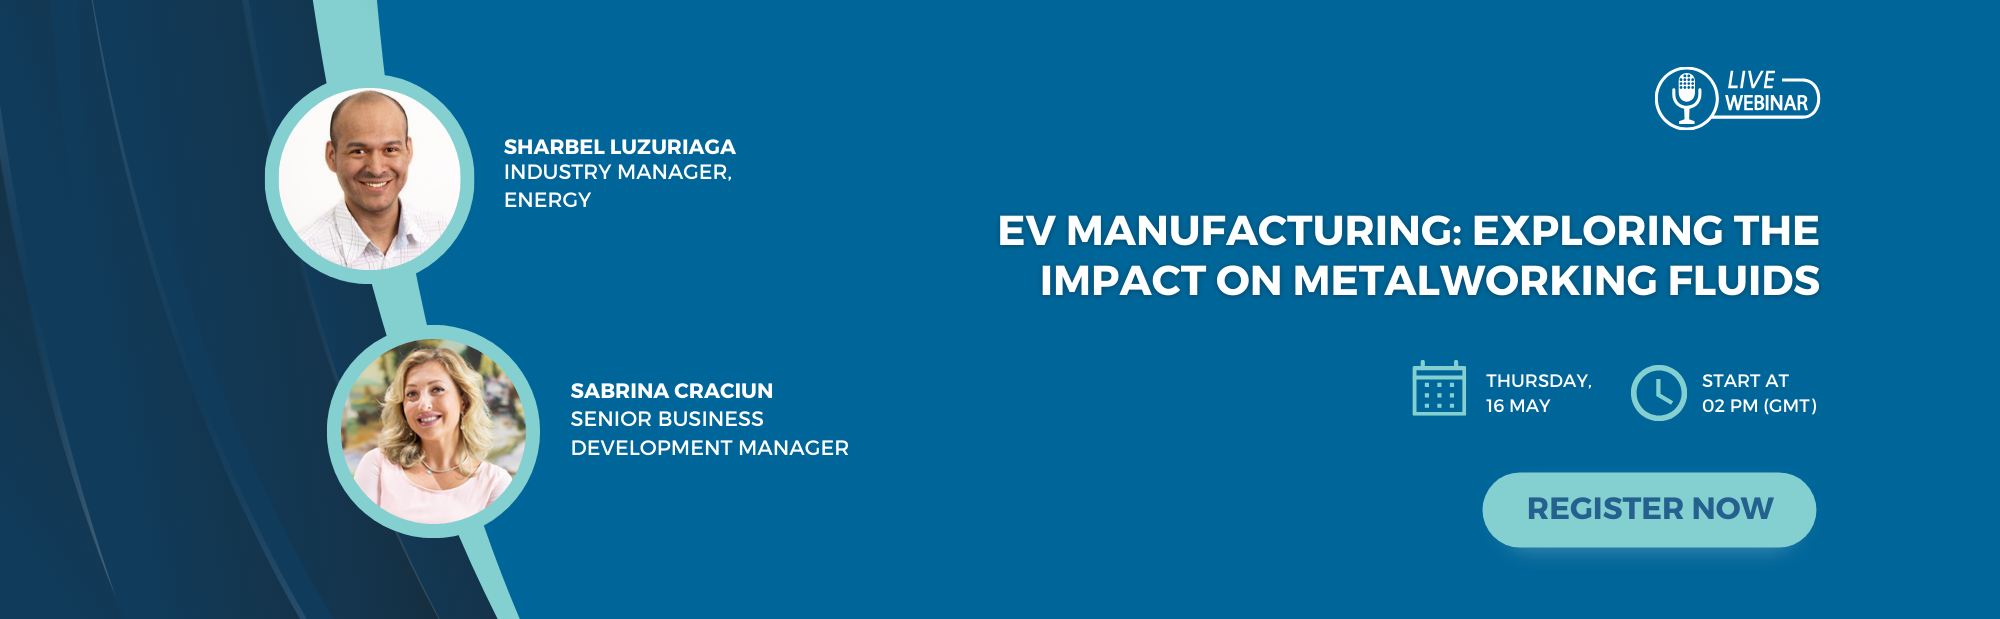 ev manufacturing webinar banner homepage